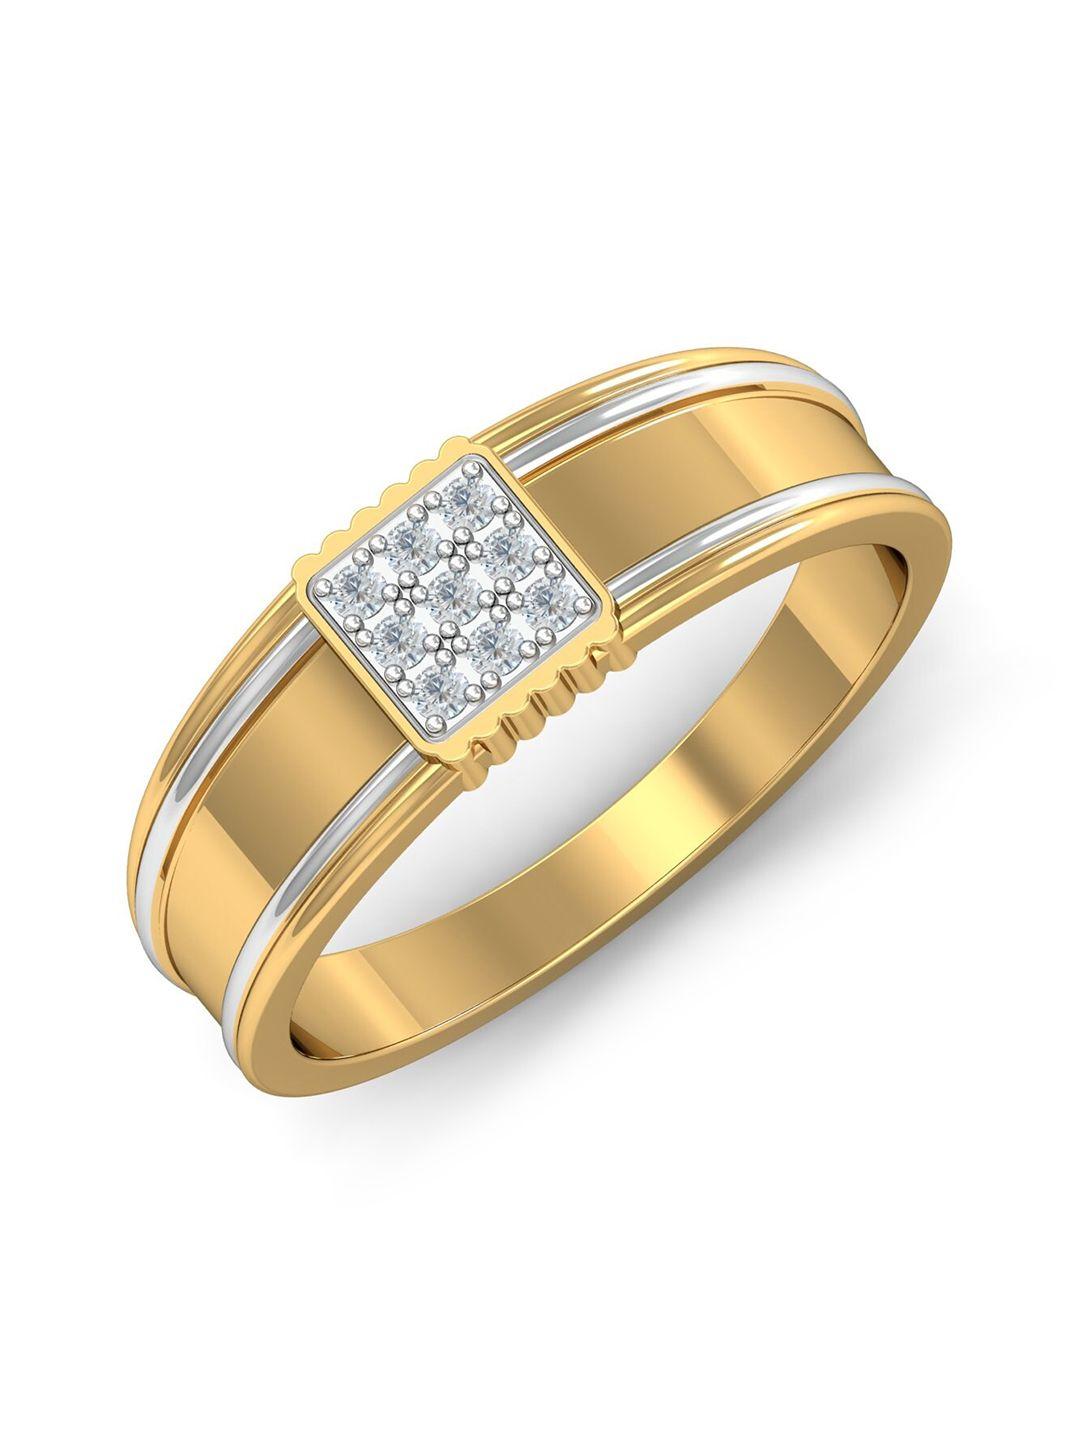 kuberbox-rapier-men-18kt-gold-diamond-studded-ring-4.93gm